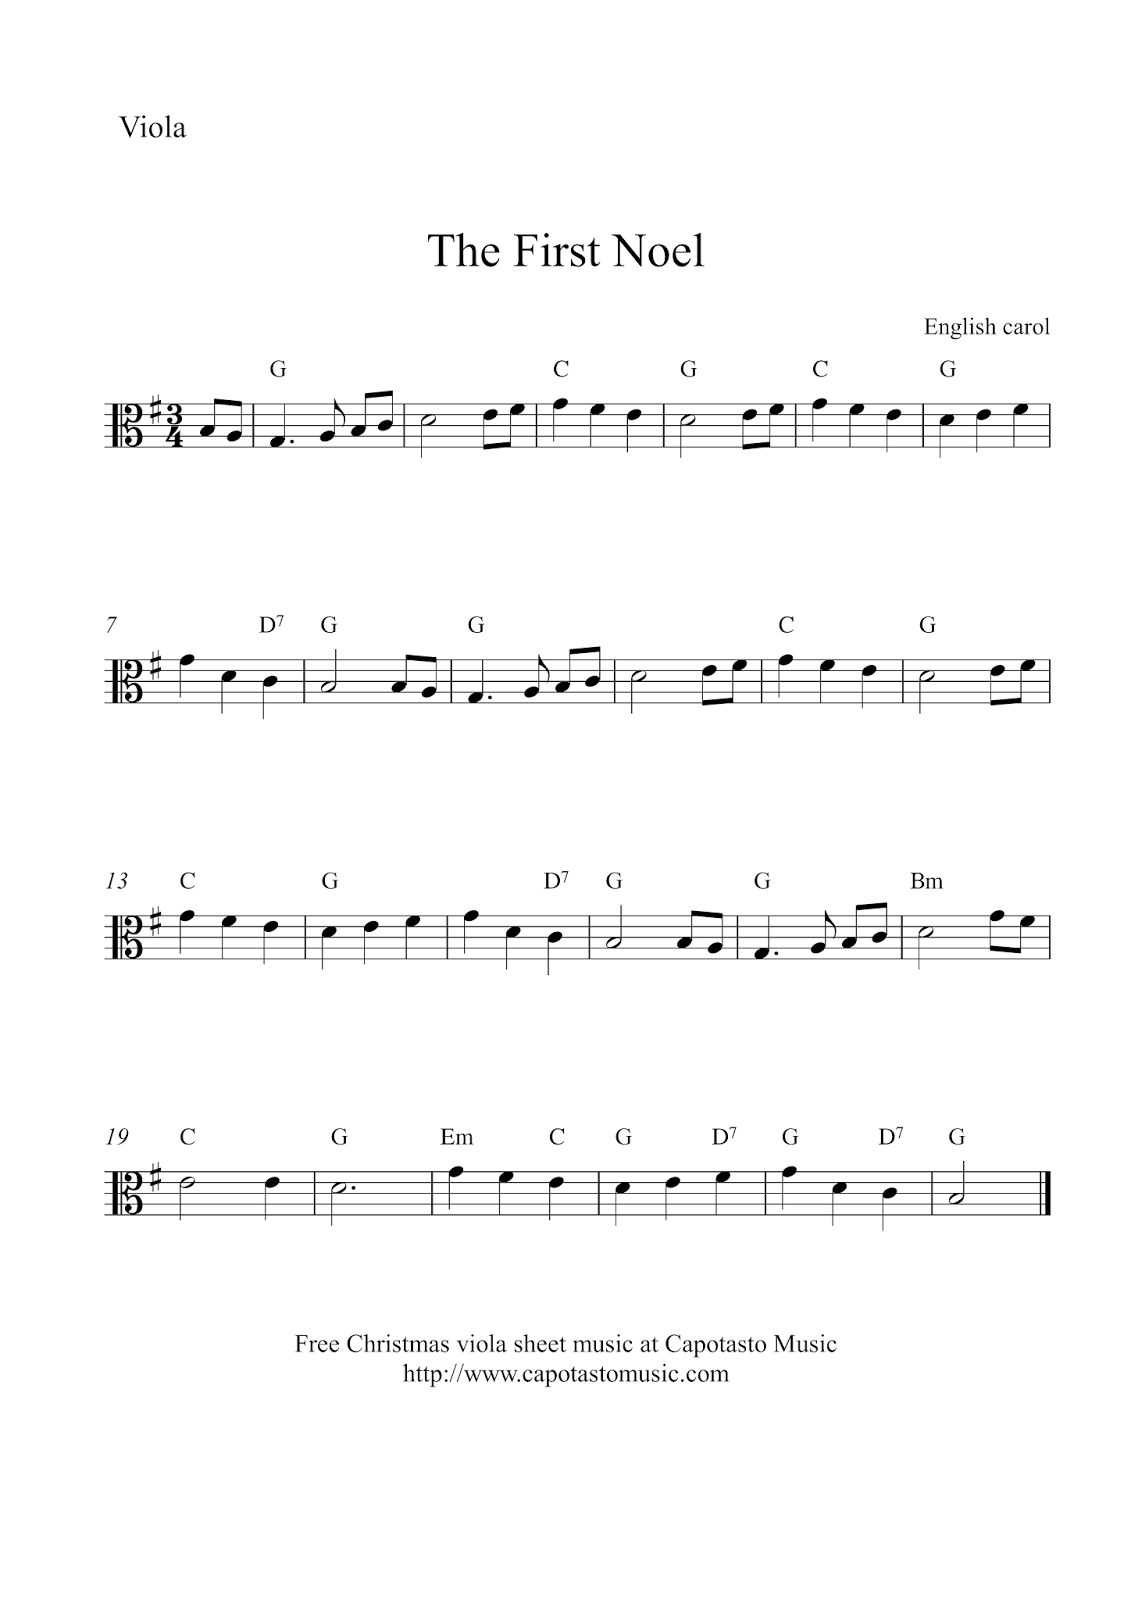 Free easy Christmas viola sheet music - The First Noel